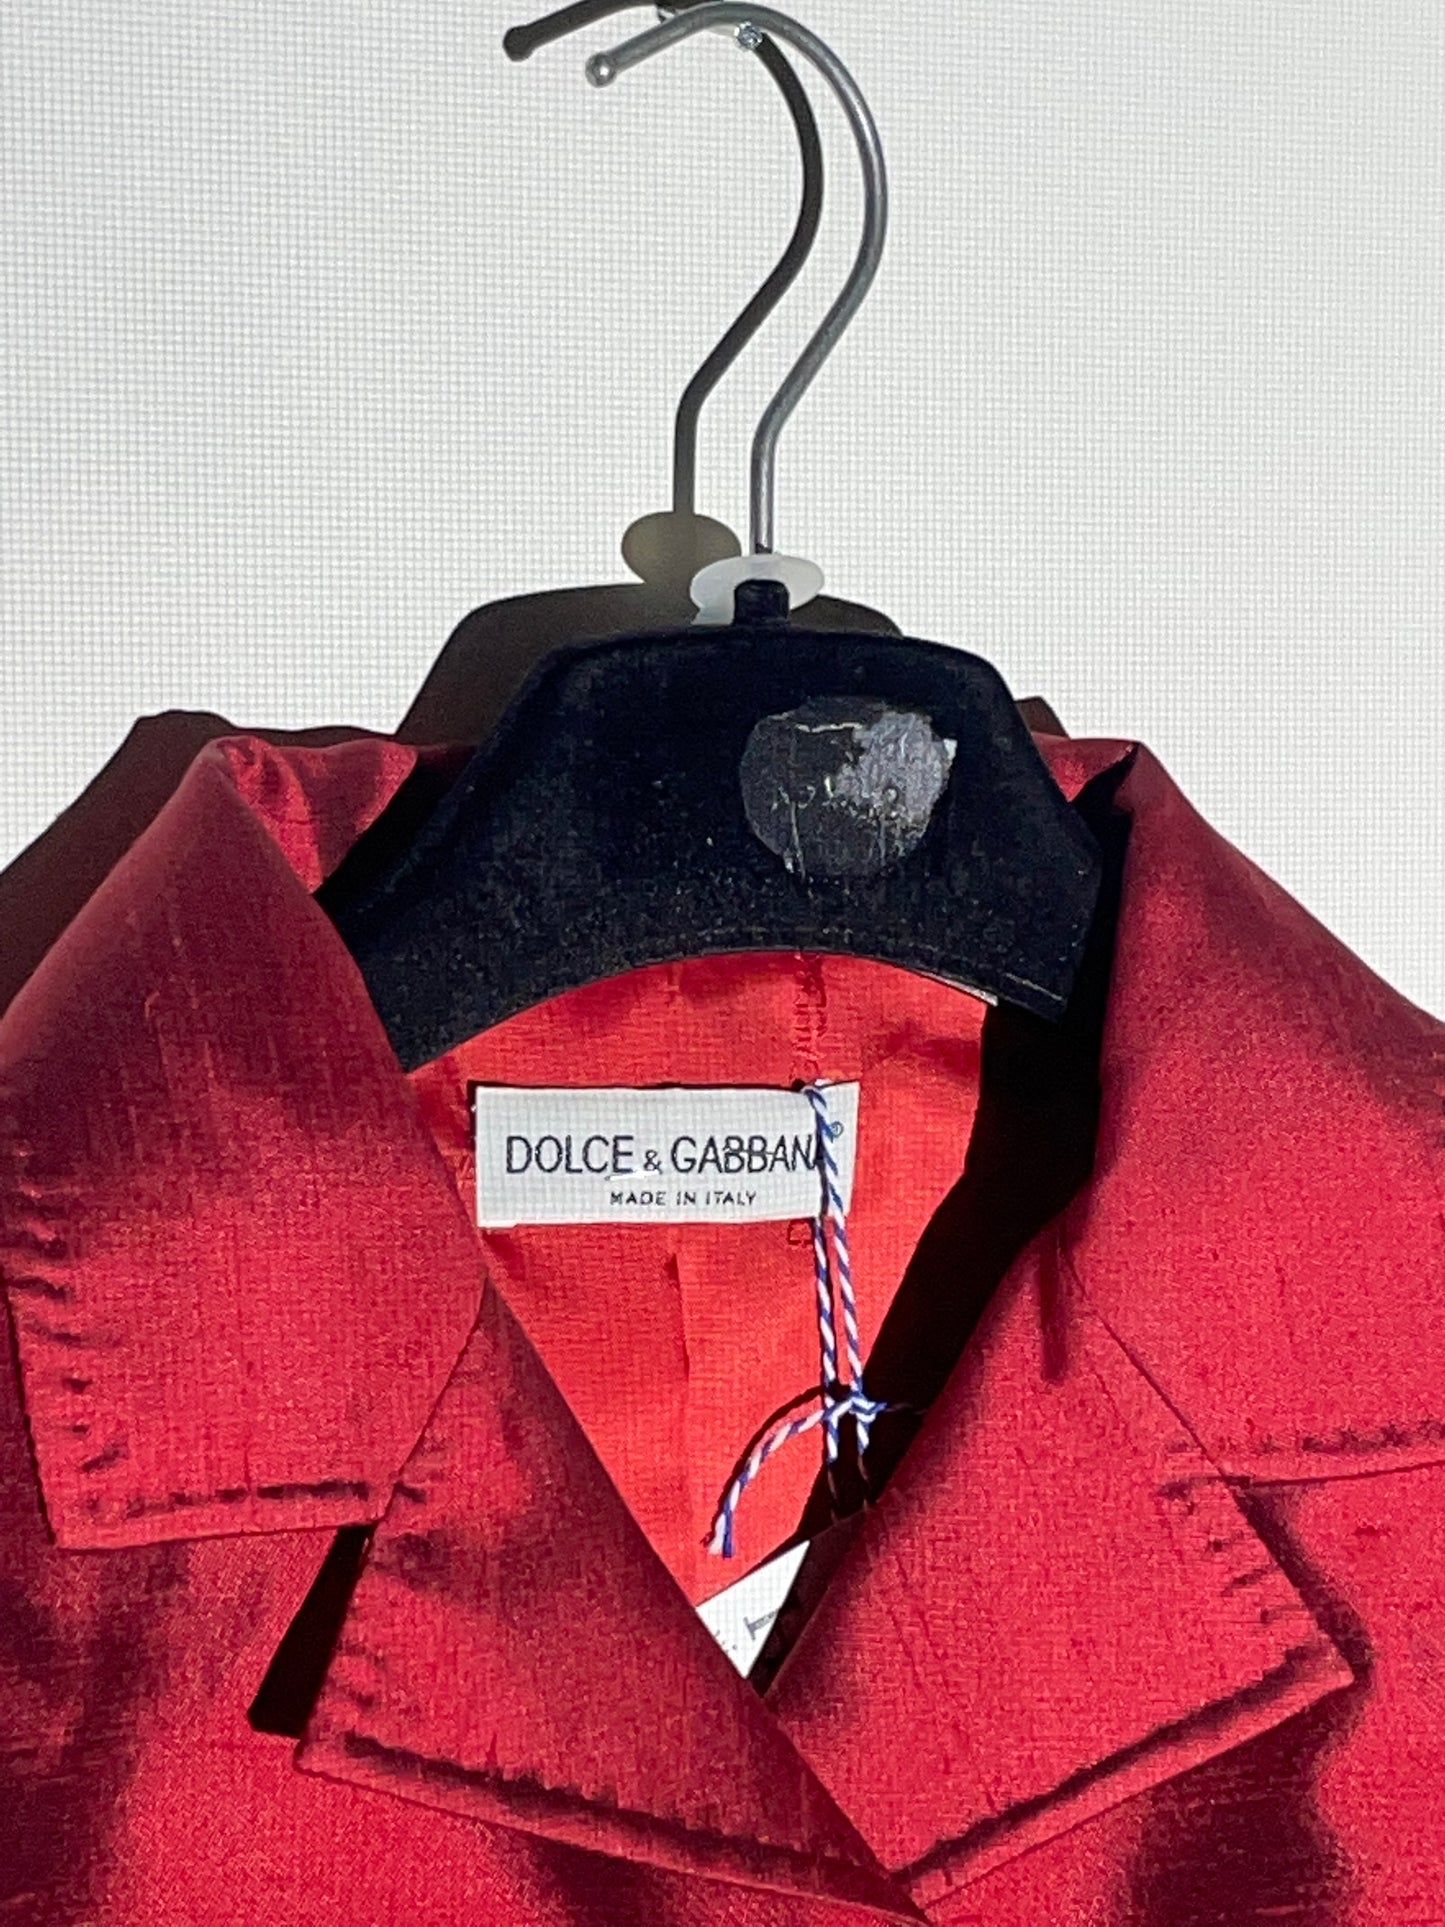 Dolce & Gabbana 2000's red raw silk skirt suit